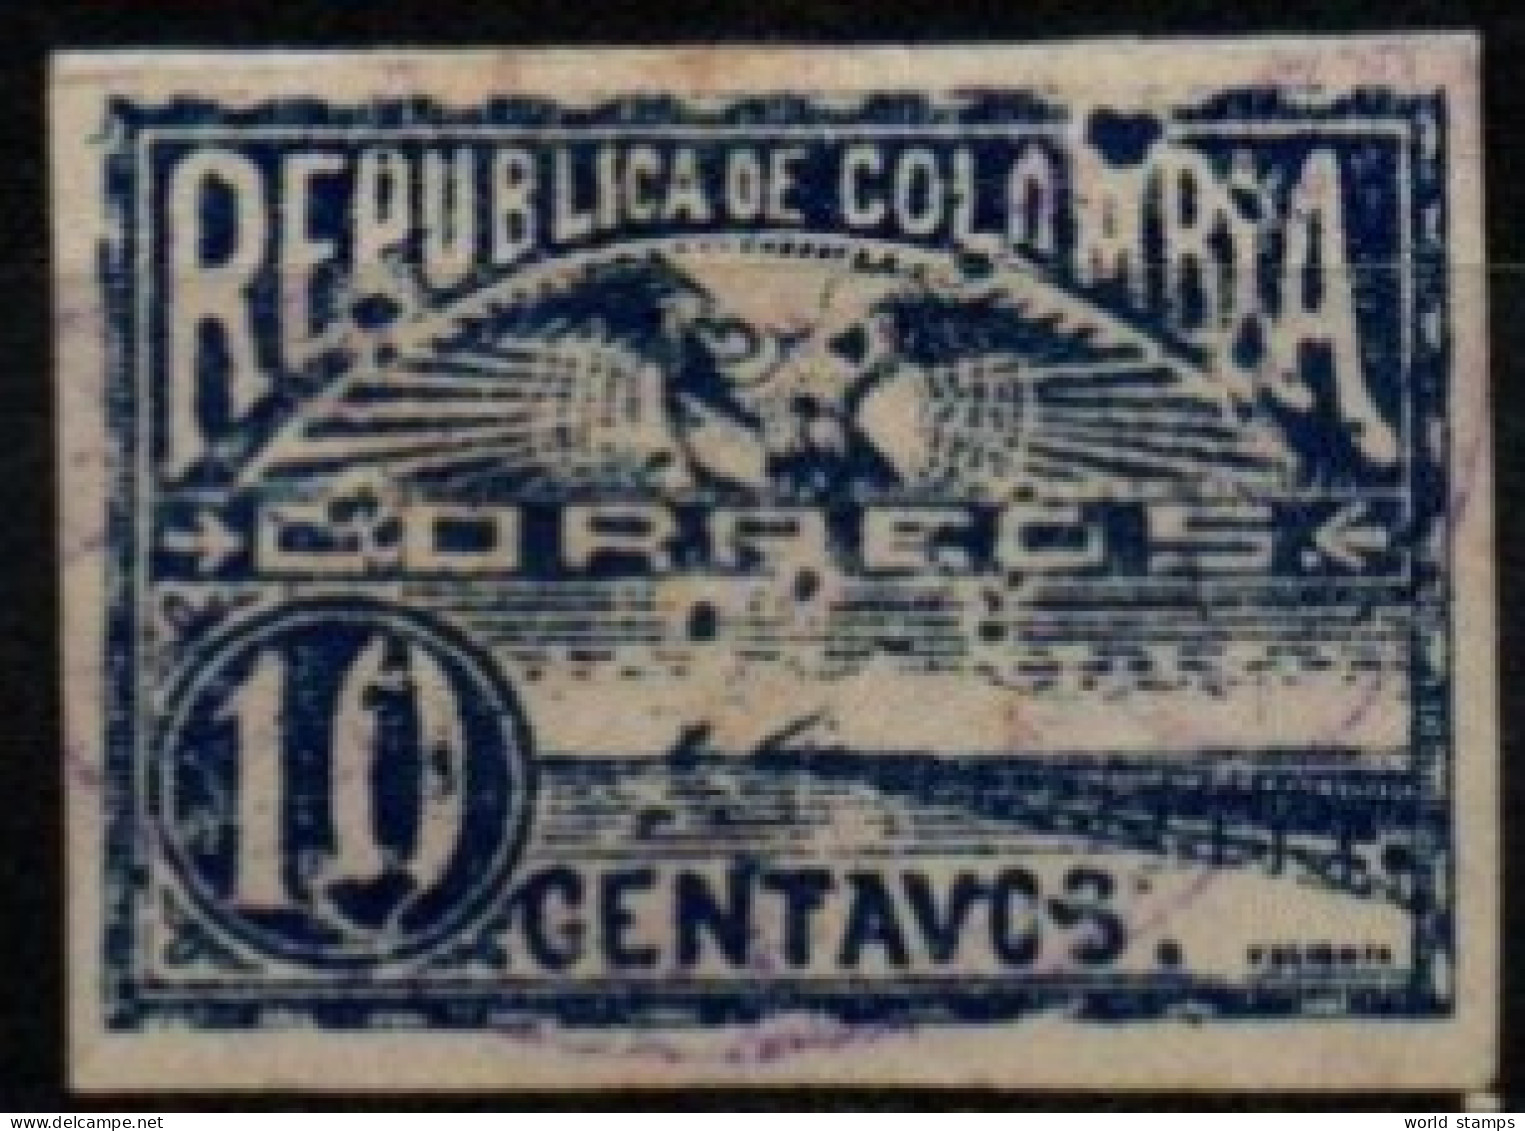 COLOMBIE 1902-3 O - Kolumbien